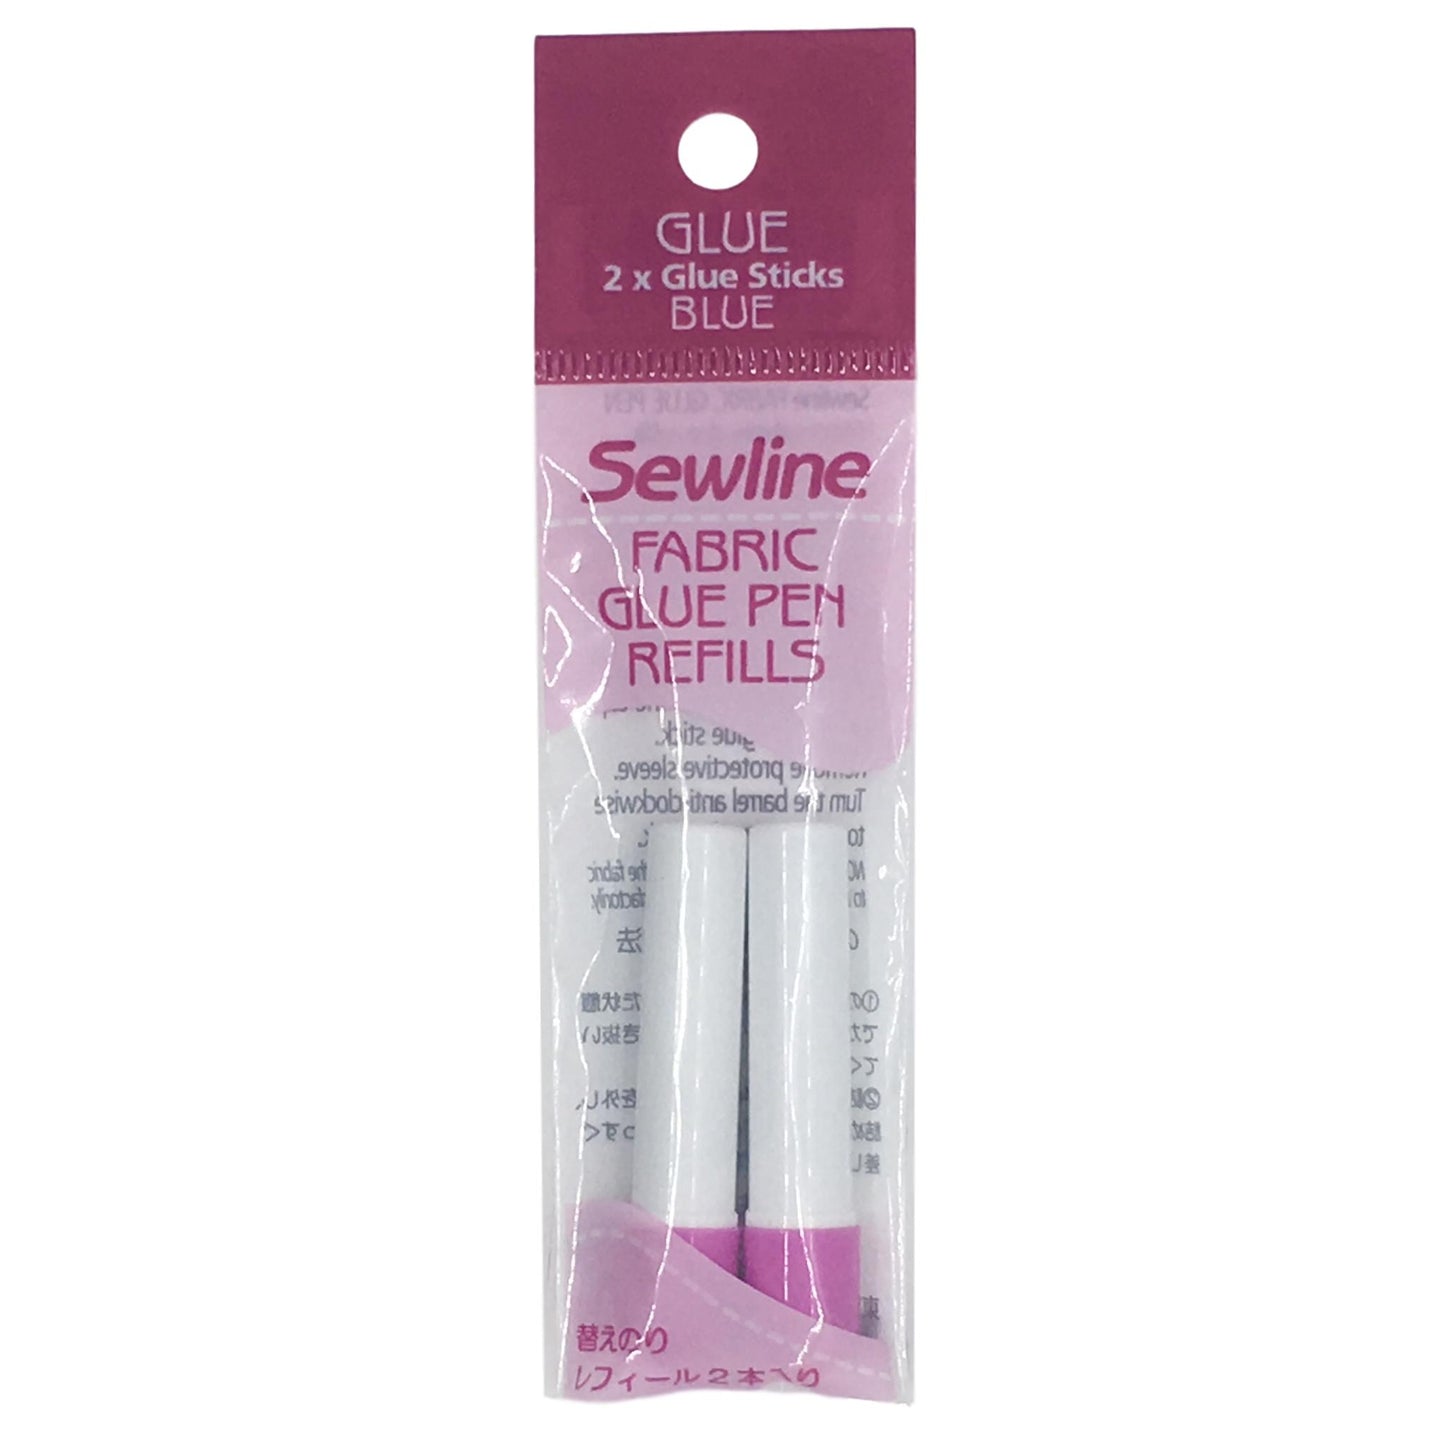 Sewline - Fabric Glue Pen REFILLS